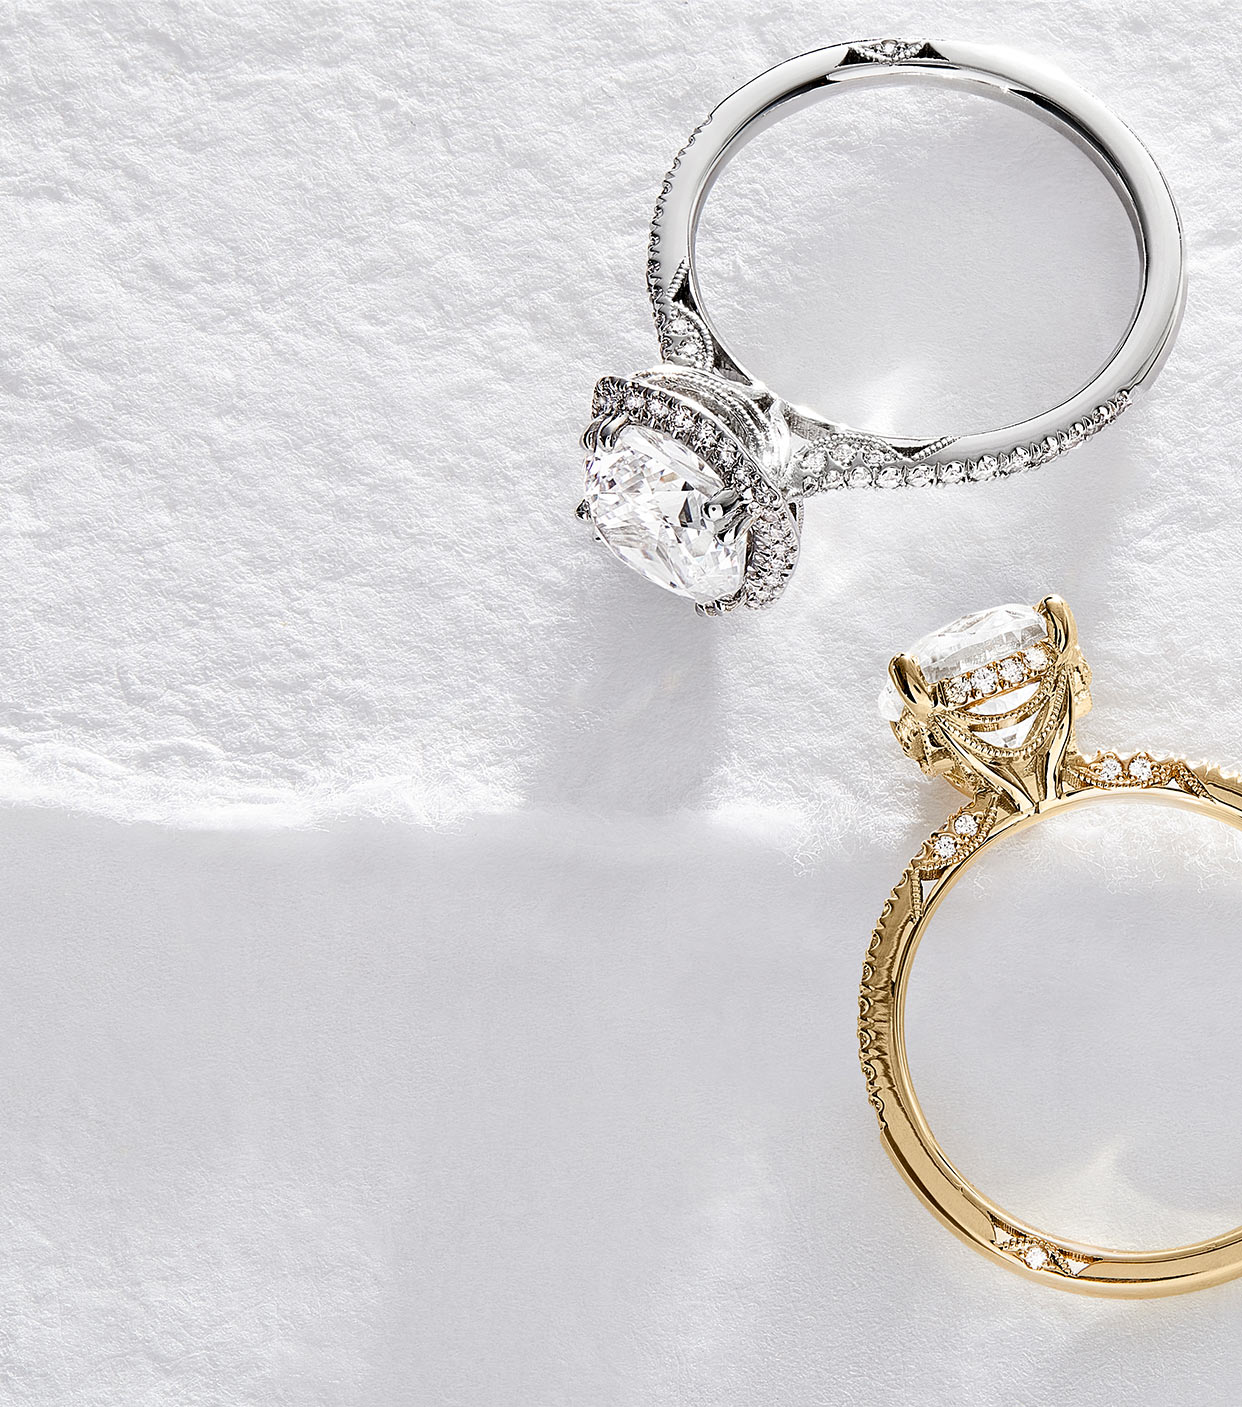 Pair of diamond engagement rings.